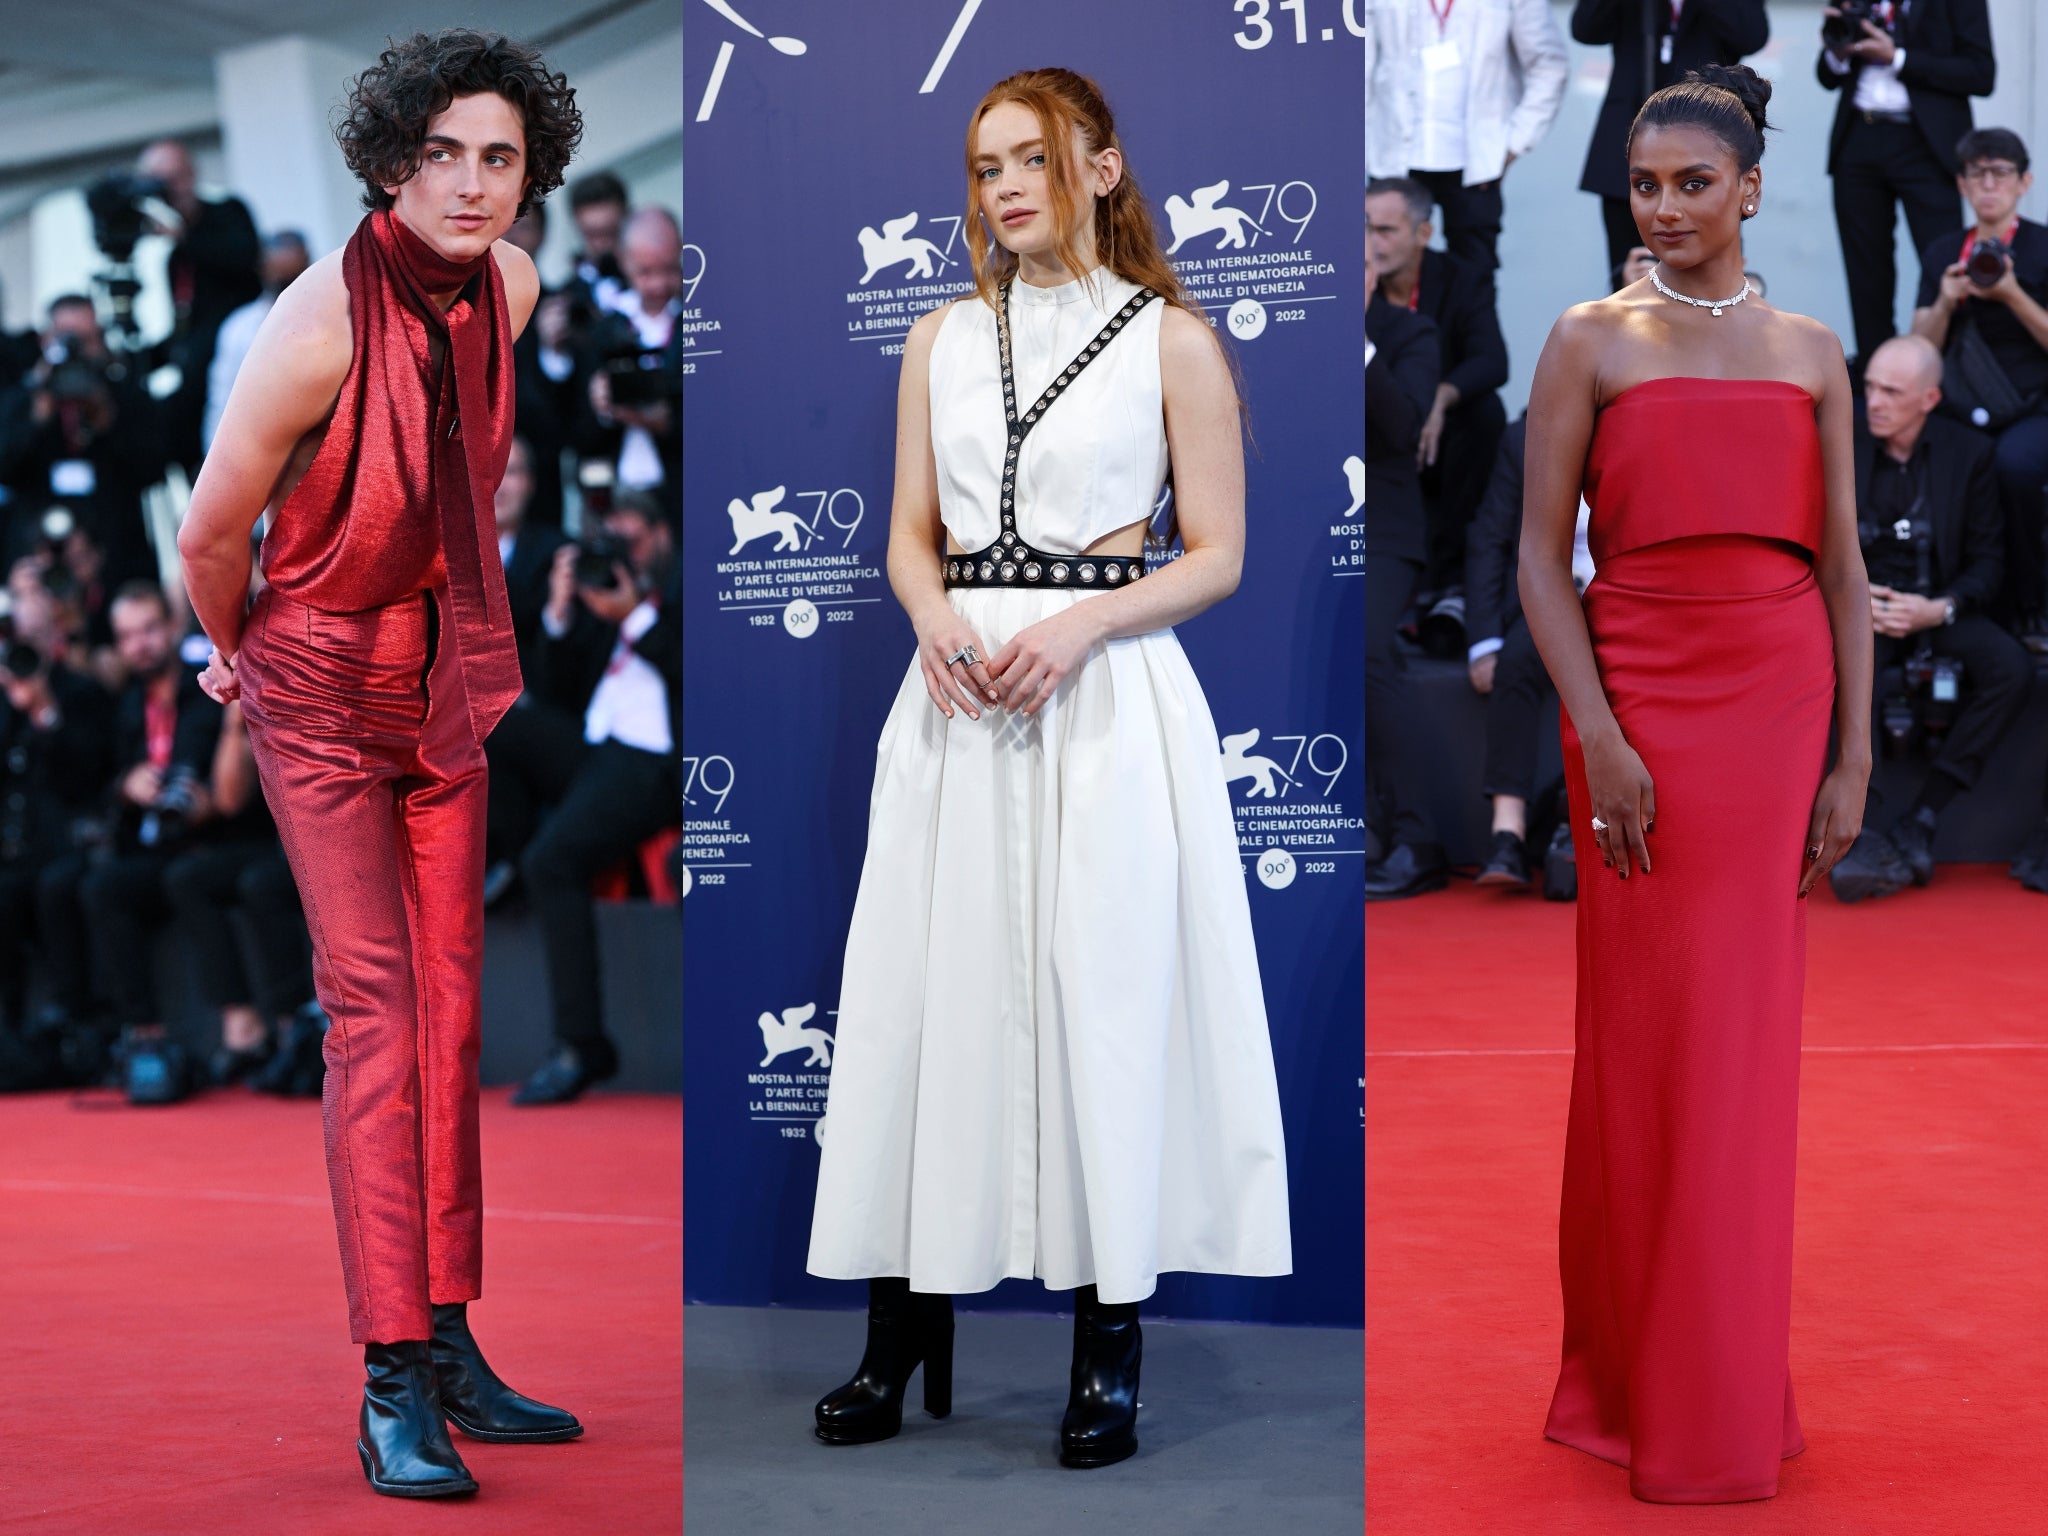 Promo Tour Star 2022: Menswear Edition: Timothée Chalamet For 'Bones & All'  - Red Carpet Fashion Awards